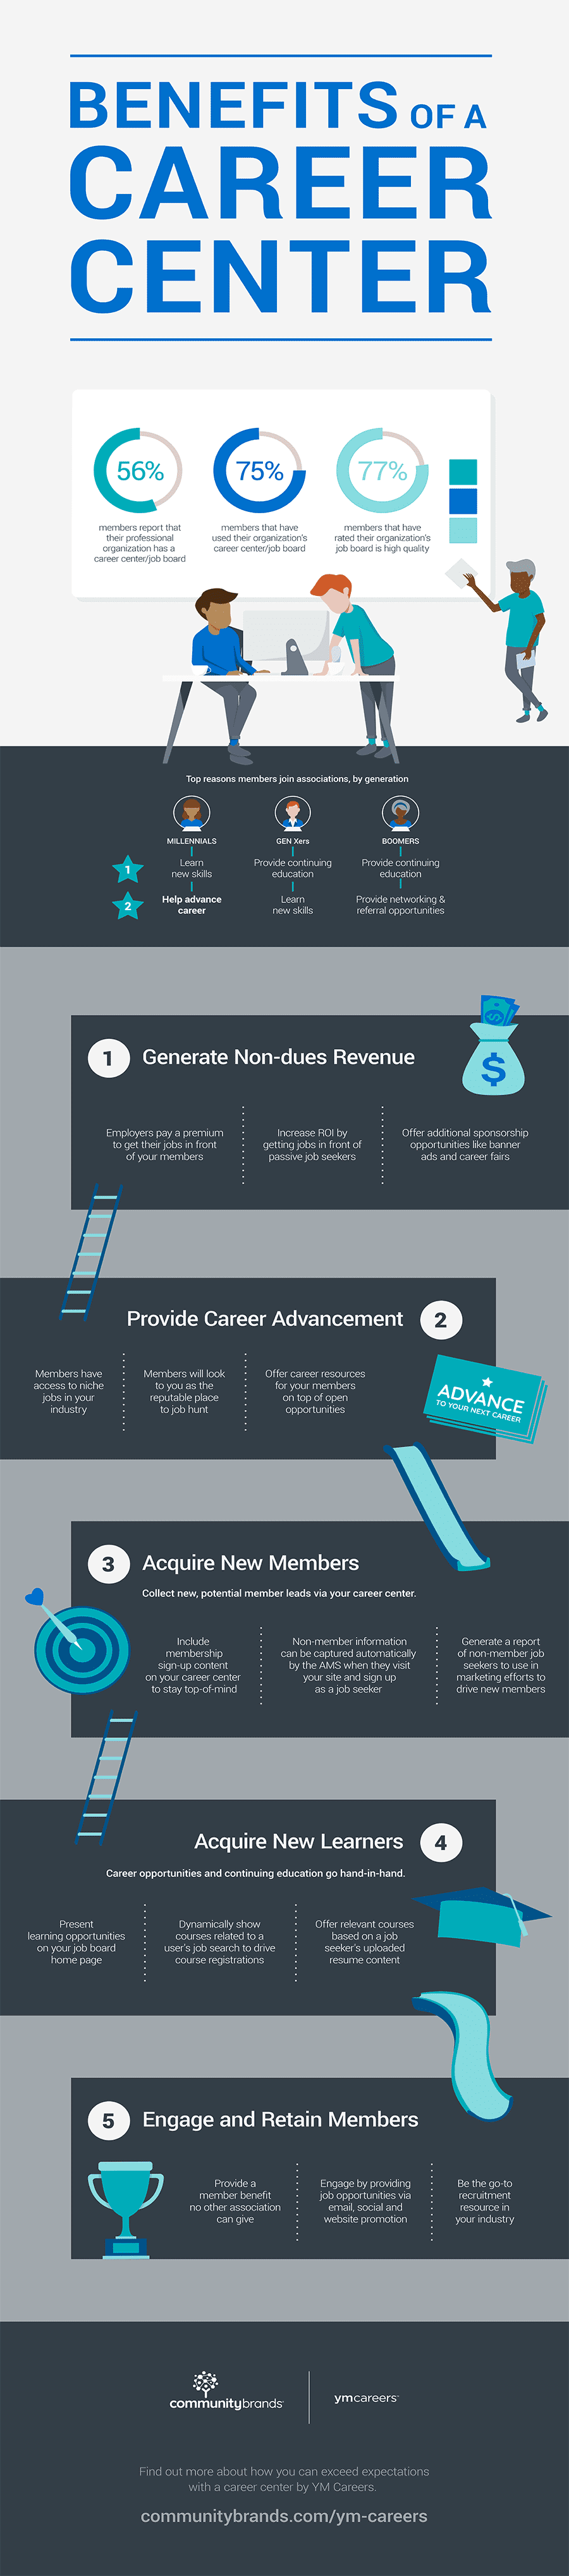 Career Center Benefits